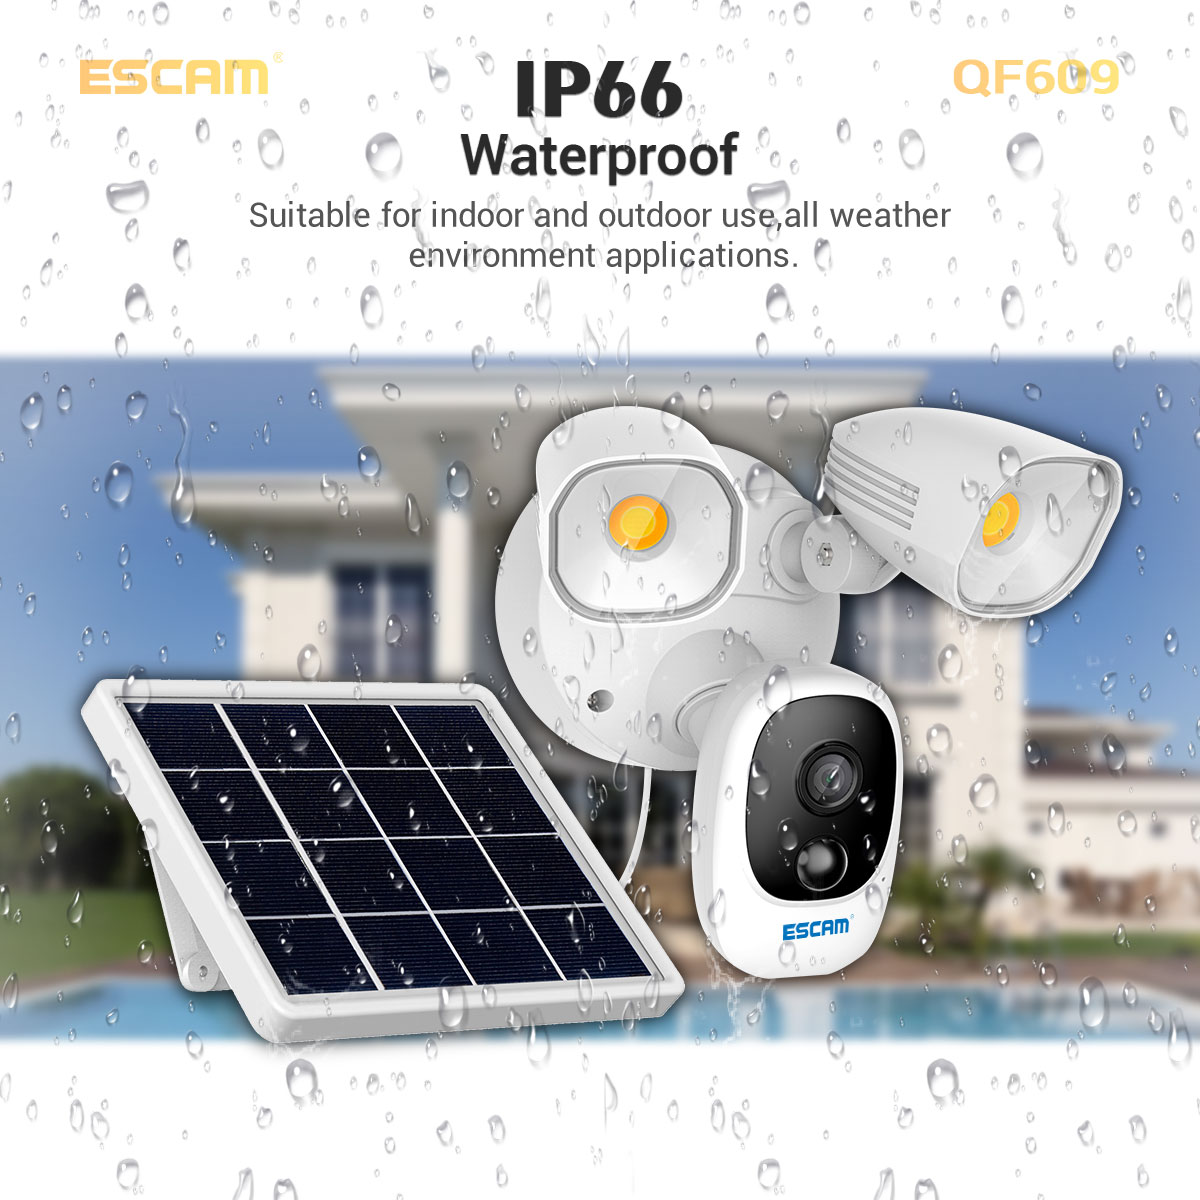 ESCAM-QF609-Solar-Powered-Floodlight-1080P-Wireless-Battery-1000LM-Floodlight-Cloud-Storage-Camera-W-1816646-7